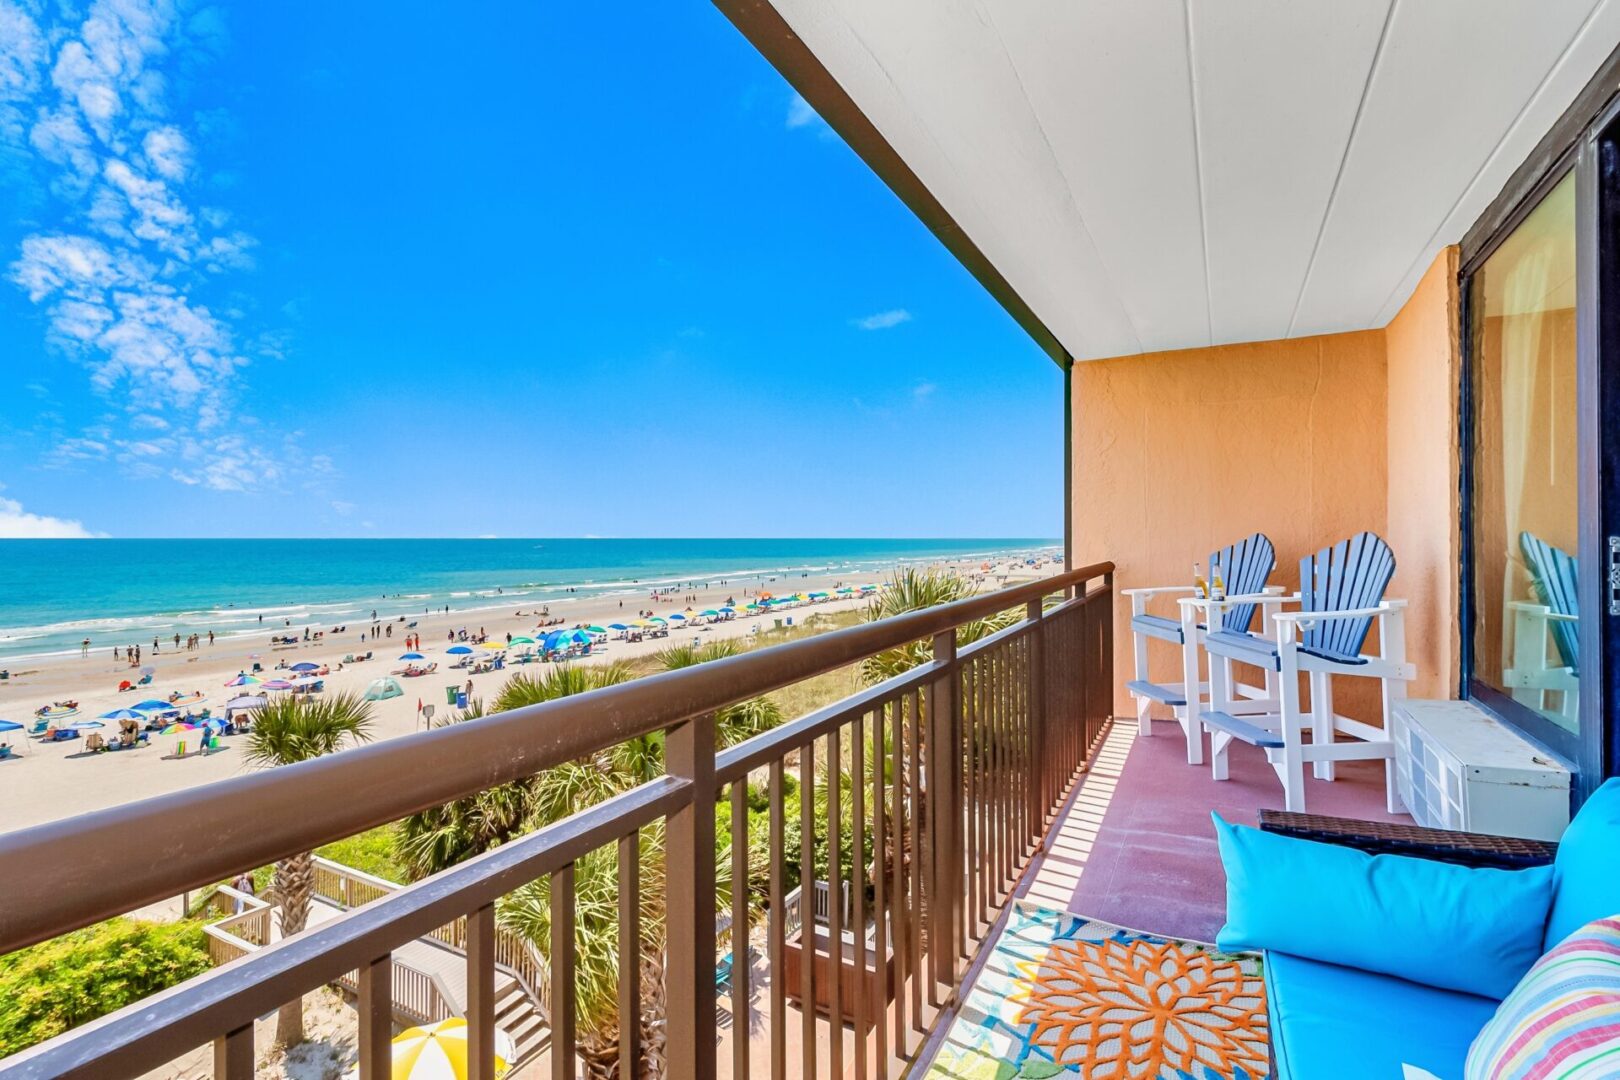 A condo balcony near a beach